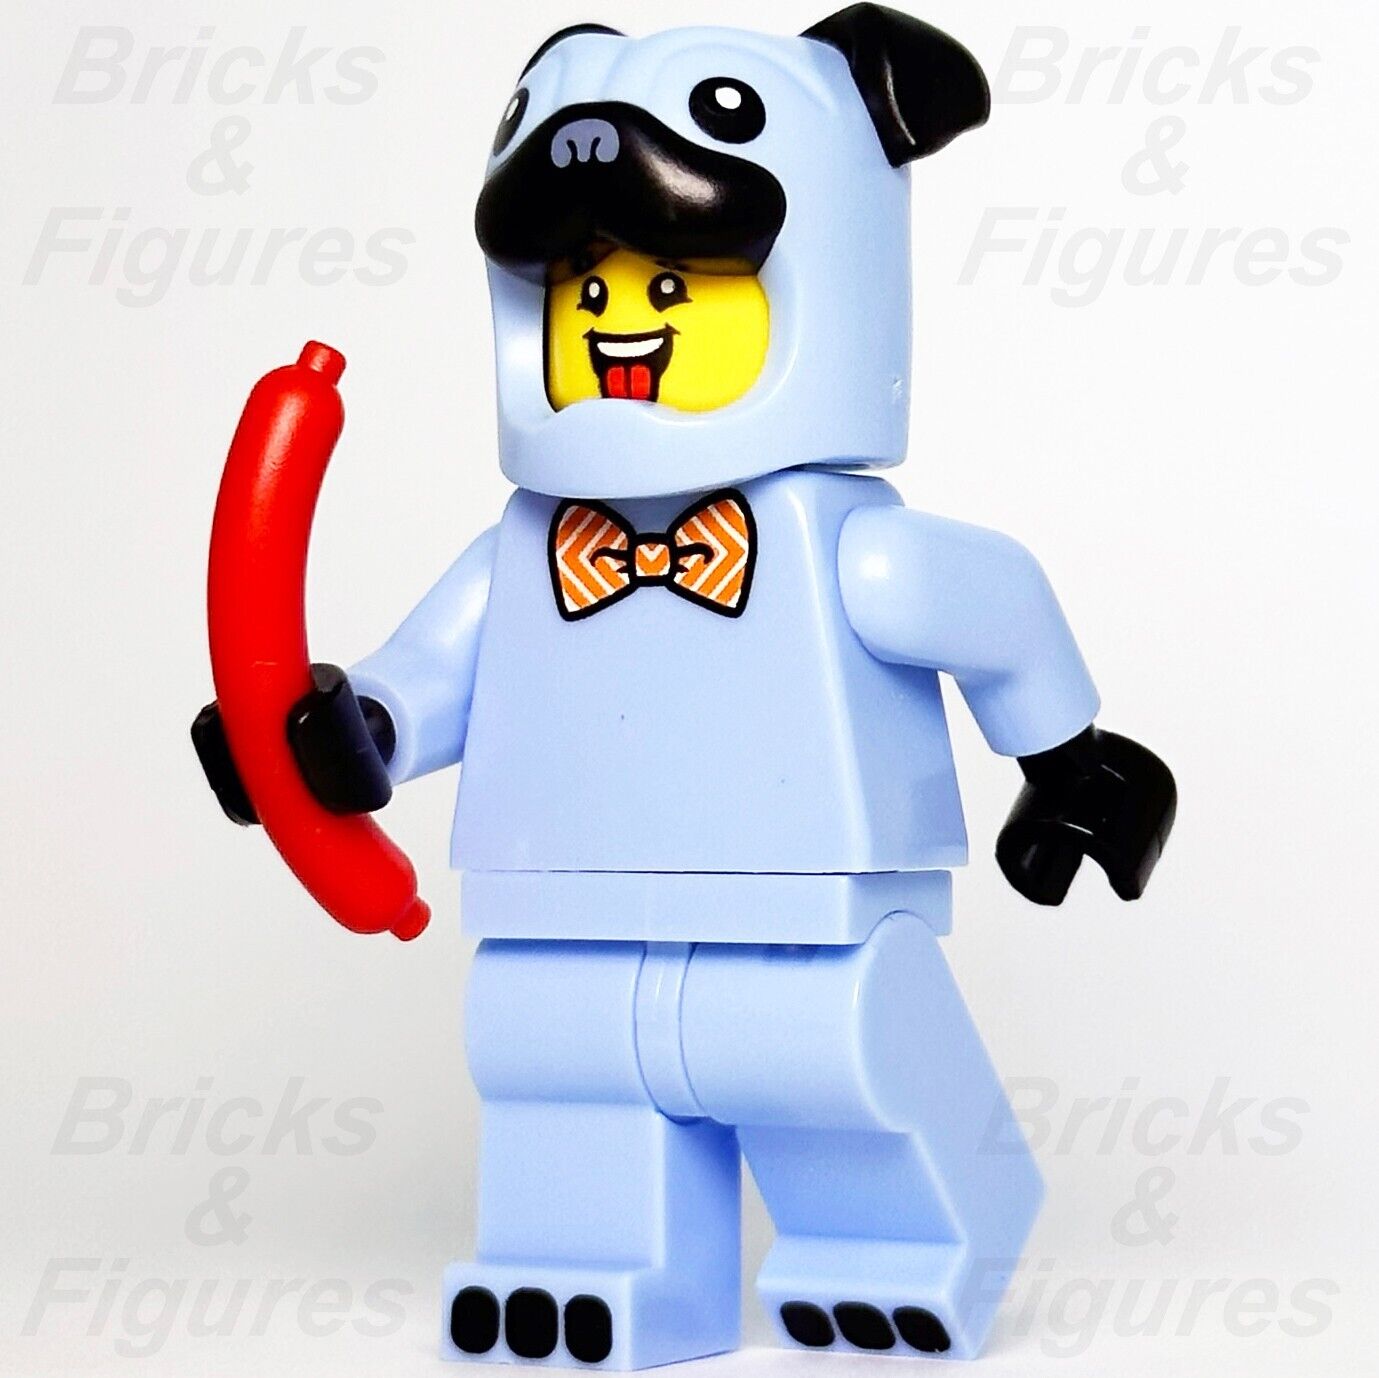 LEGO Pug Costume Guy Build-A-Minifigure with Hot Dog Part BAM 2021 hol245 Blue - Bricks & Figures